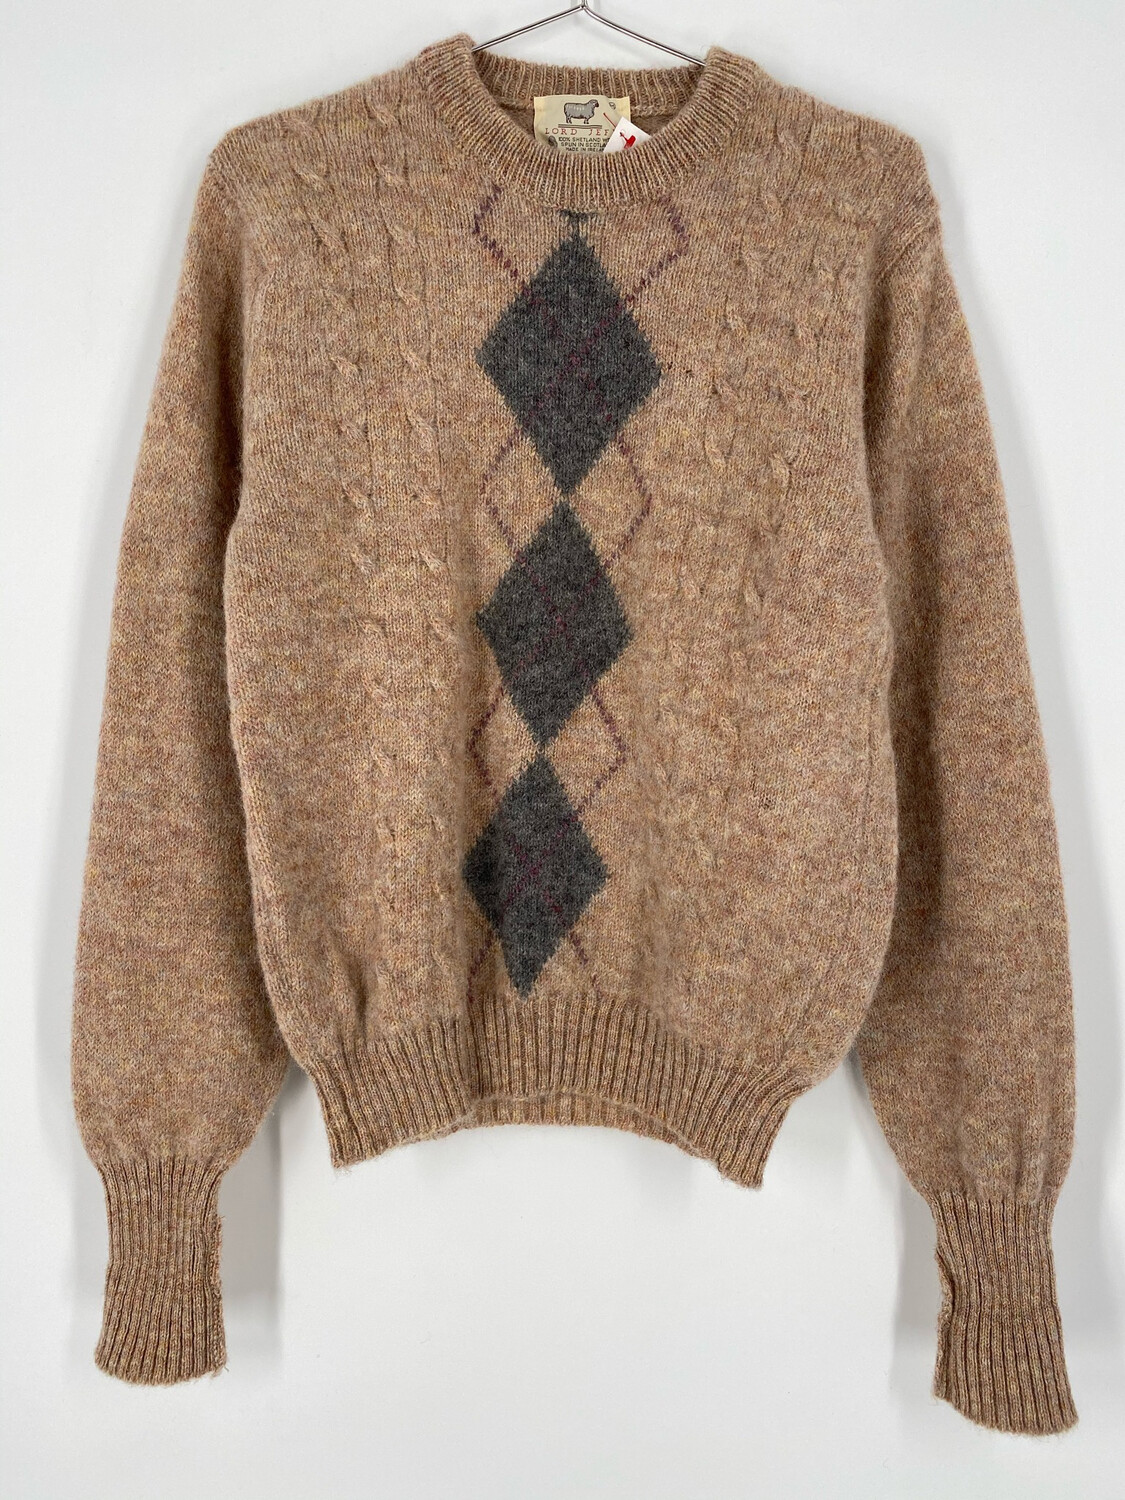 Lord Jeff Wool Argyle Print Sweater Size M